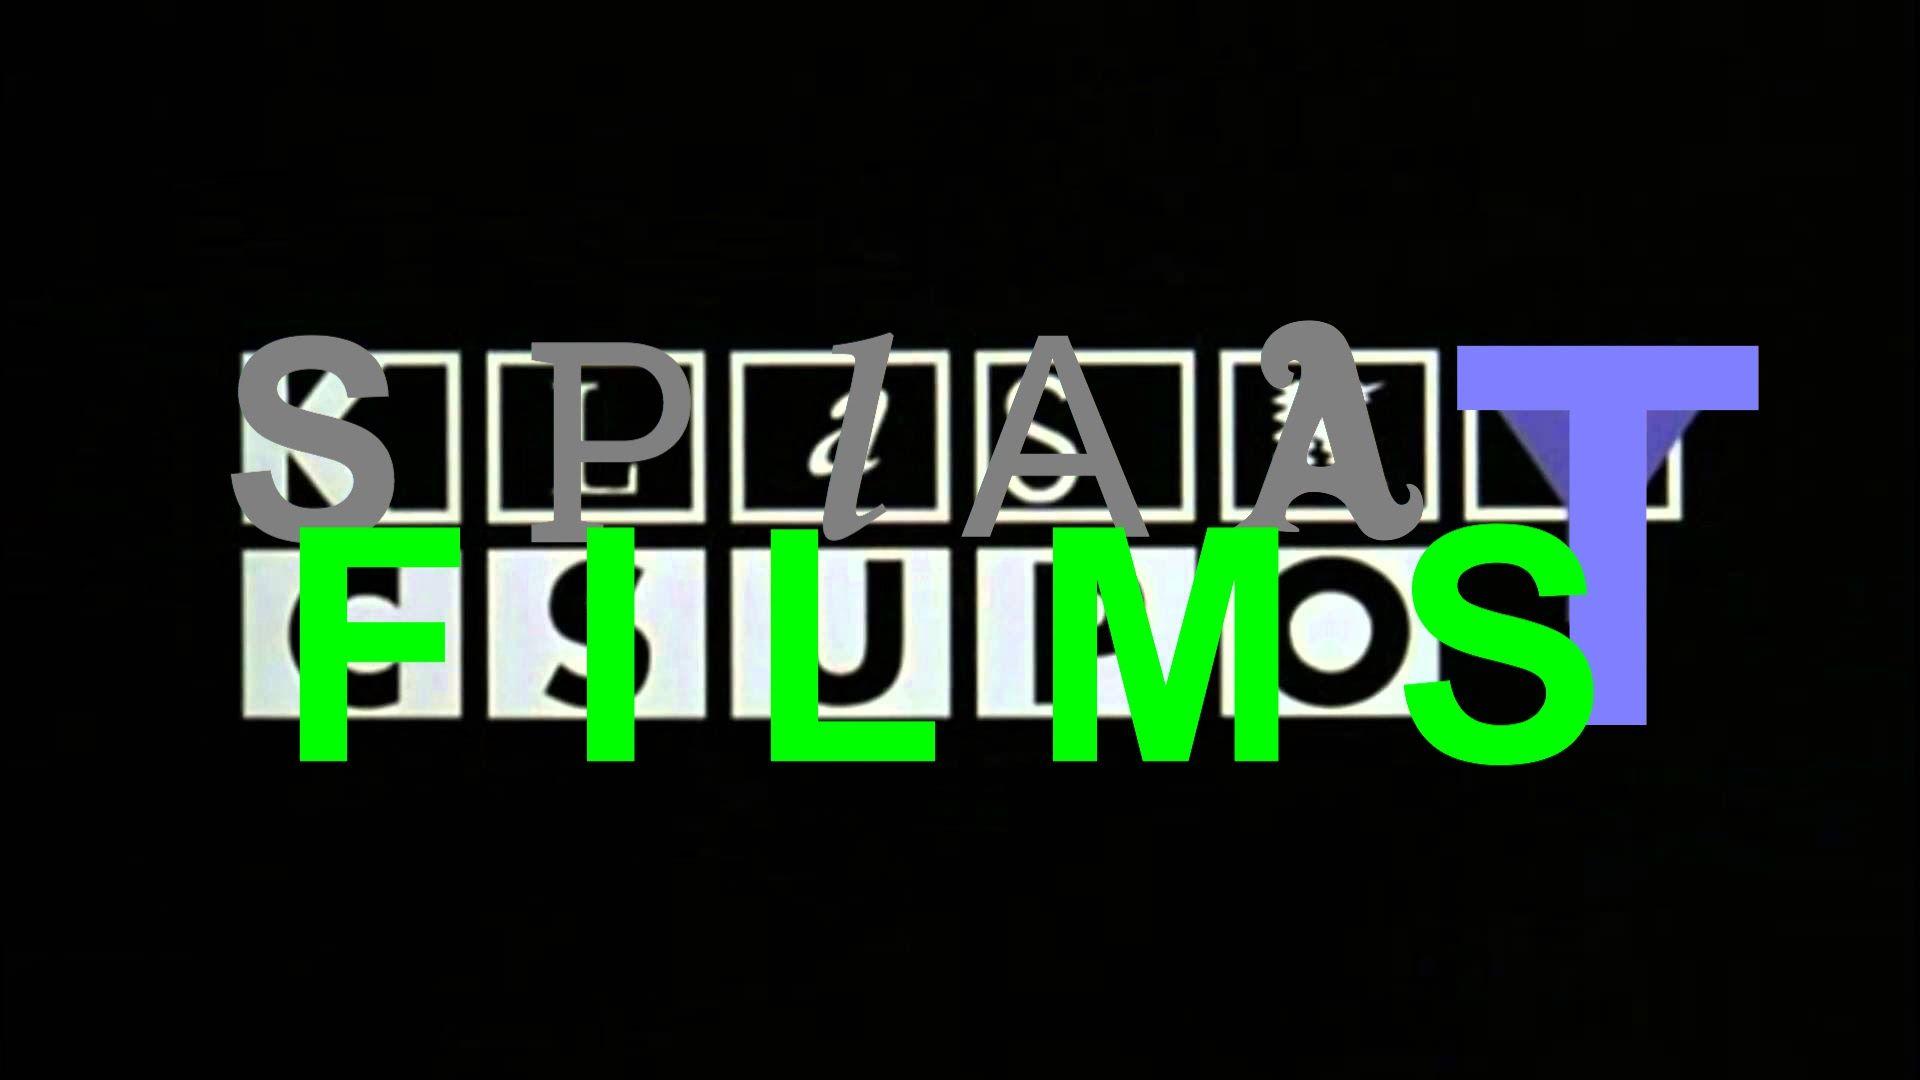 Splaat Logo - Splaat Films. Adam's Dream Logos 2.0's Closing Logos